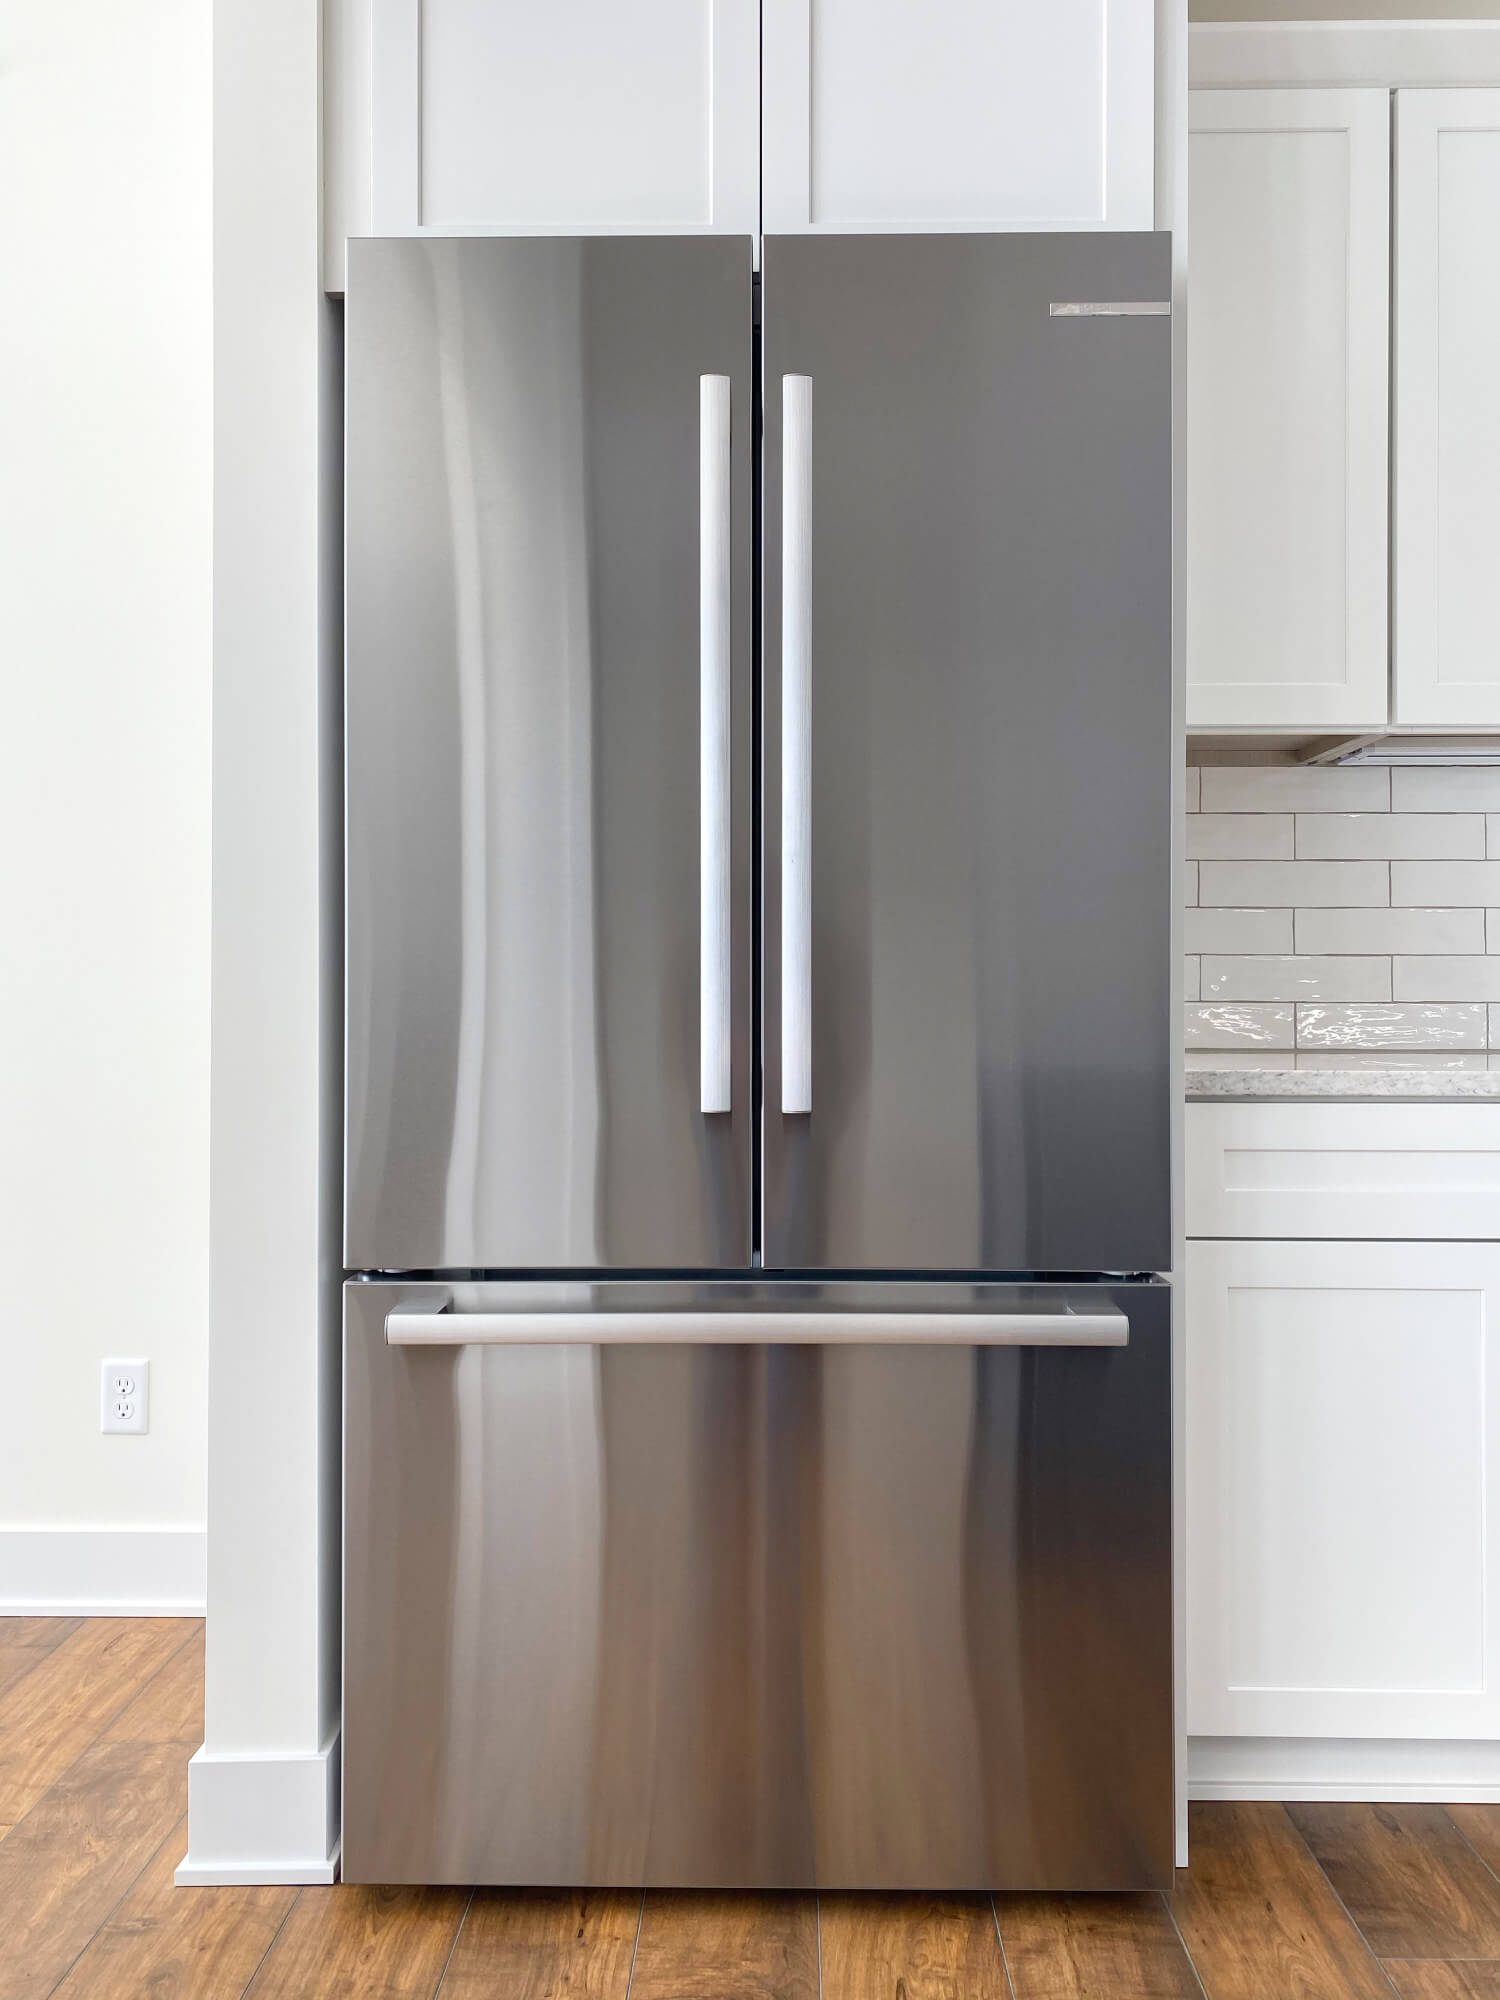 A360-Kitchen-riverstone-fridge-appliance-bosch.jpg